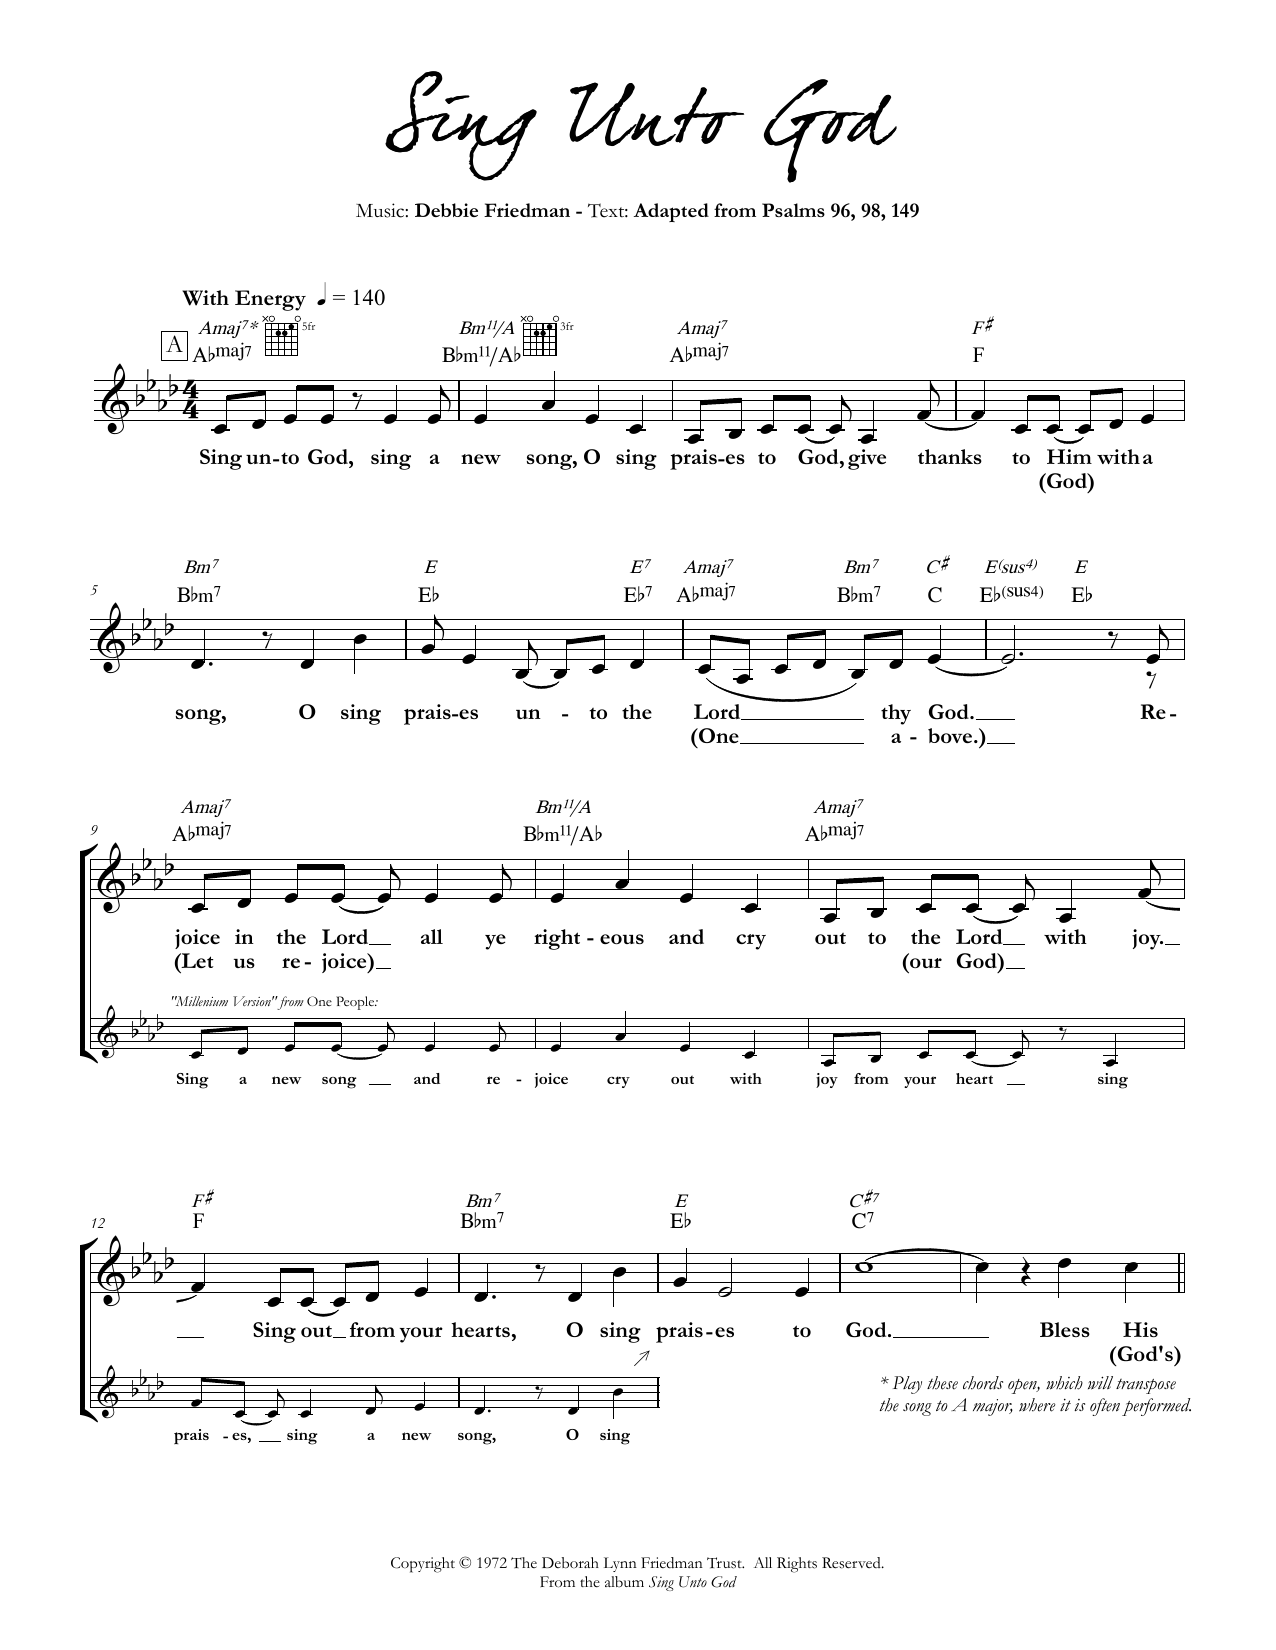 Debbie Friedman Sing Unto God Sheet Music Notes & Chords for Lead Sheet / Fake Book - Download or Print PDF